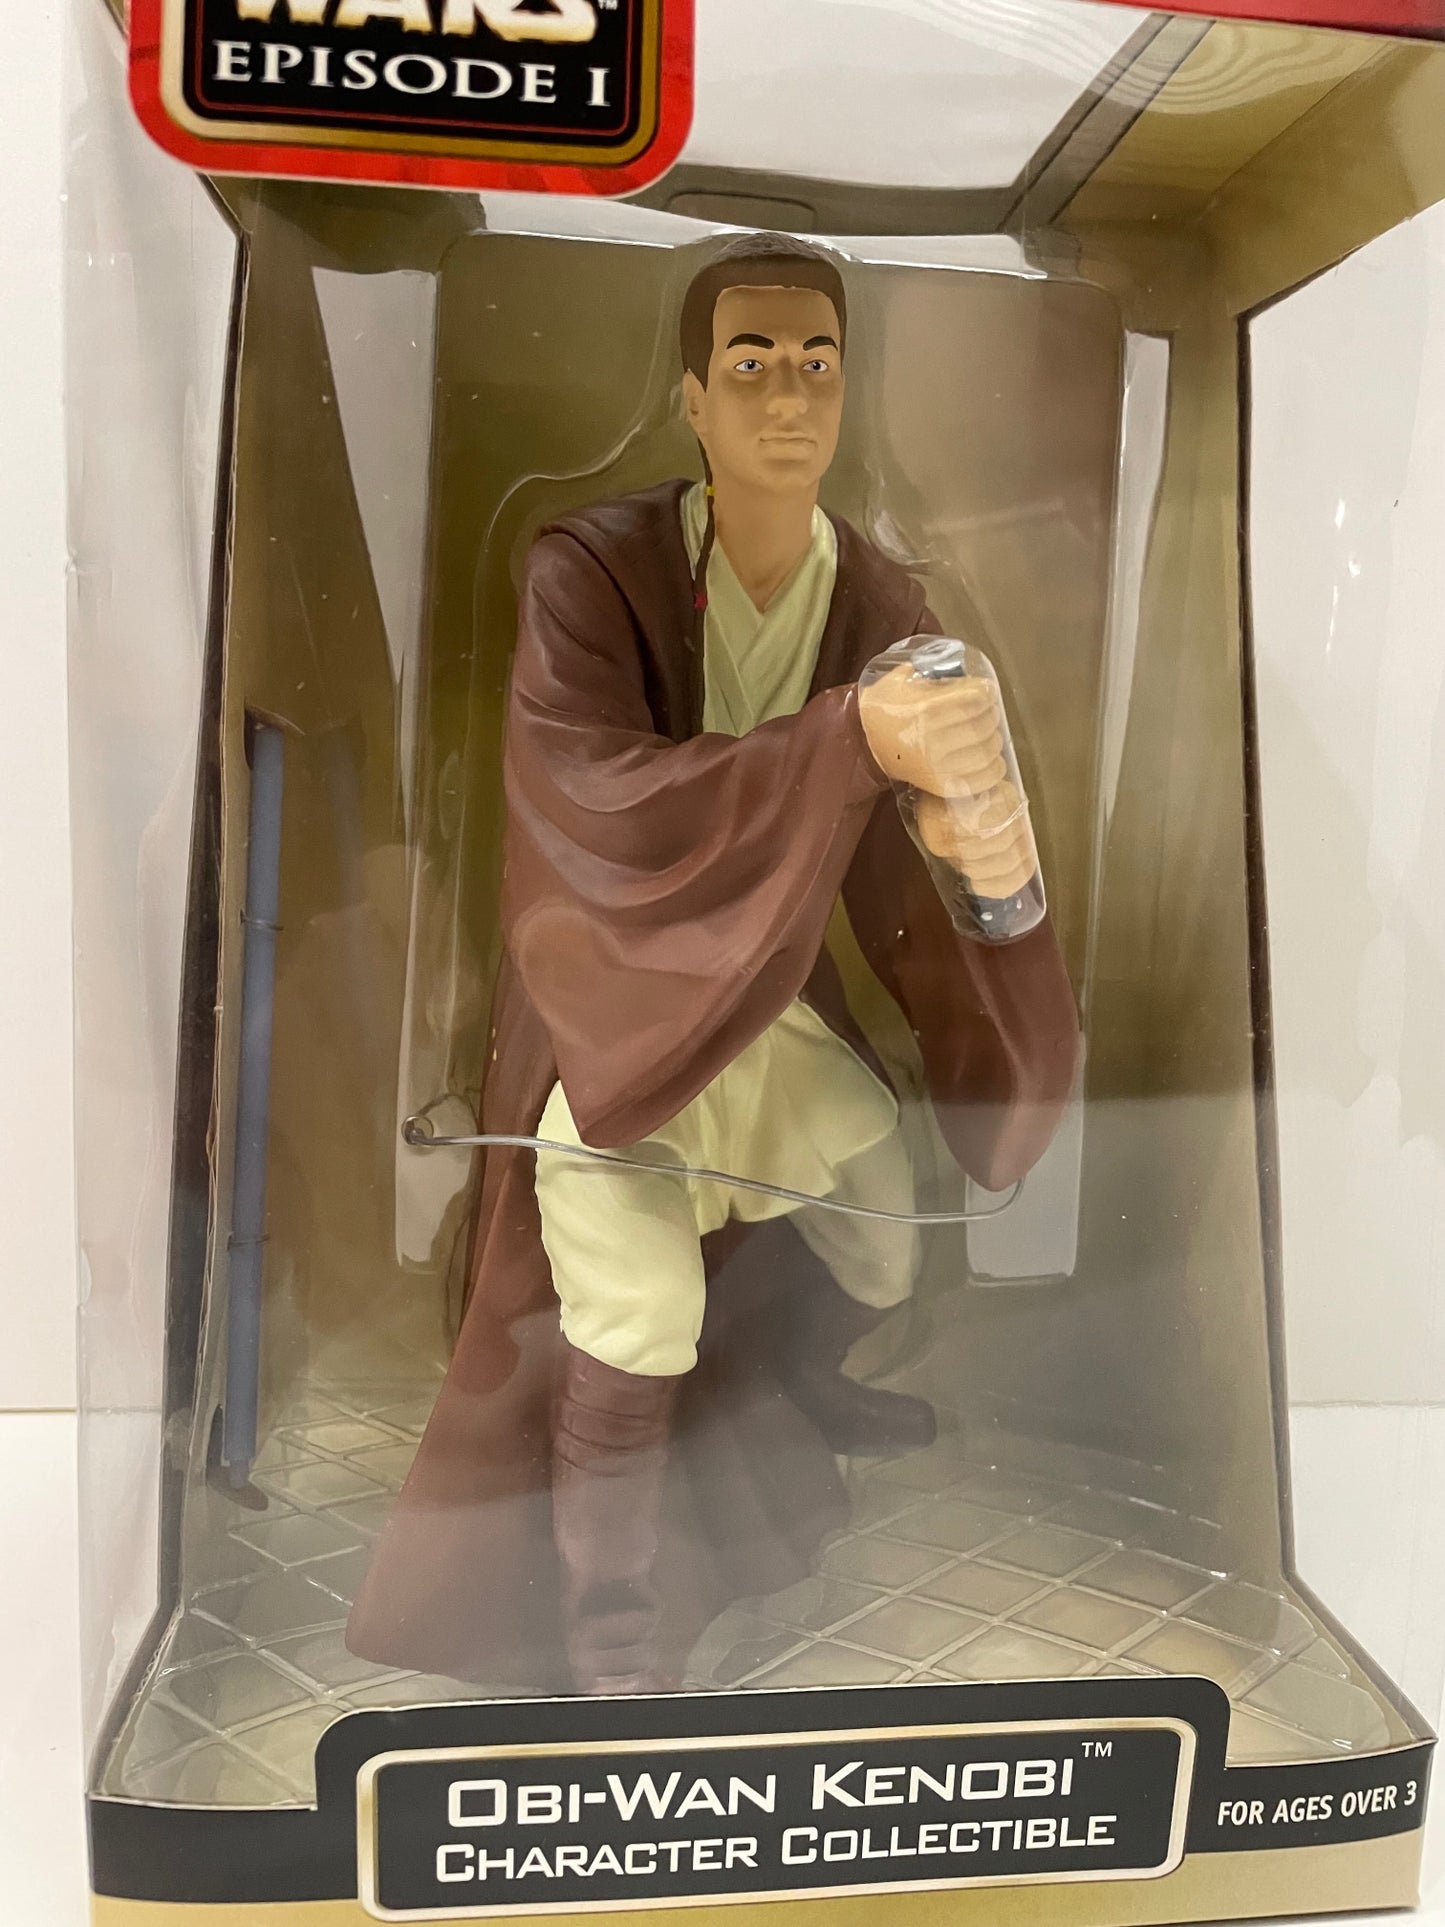 Episode 1 Obi Wan Kenobi Character Collectible Figure, Applause 1999